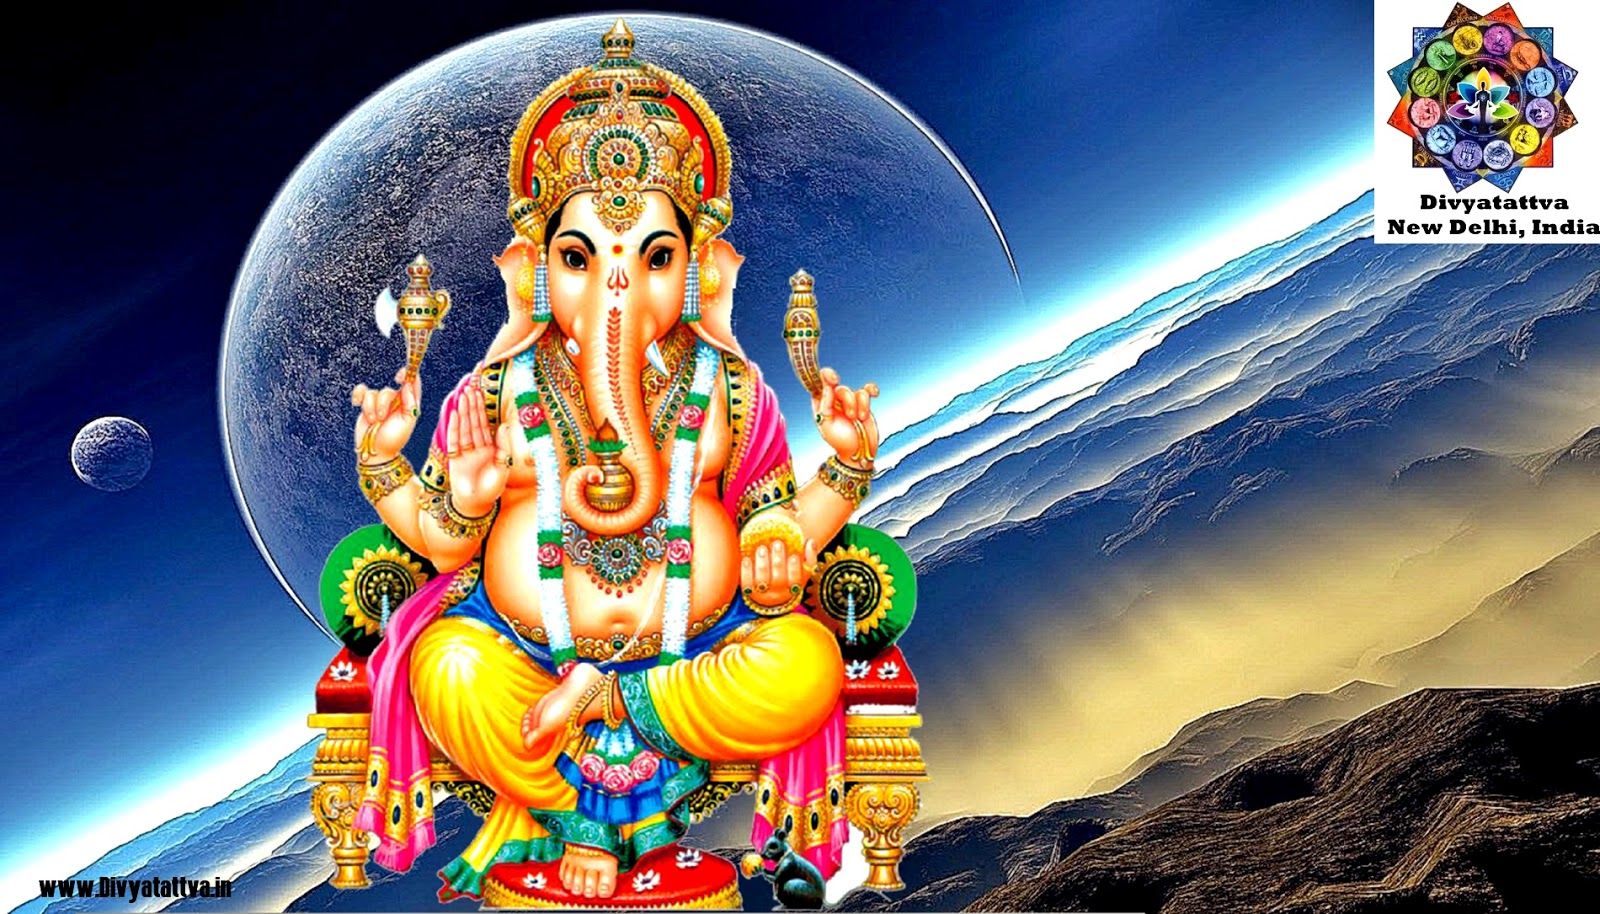 Divyatattva Astrology Free Horoscopes Psychic Tarot Yoga Tantra Occult Image Videos, Hindu God Ganesha HD Wallpaper Download Full Size Background Image